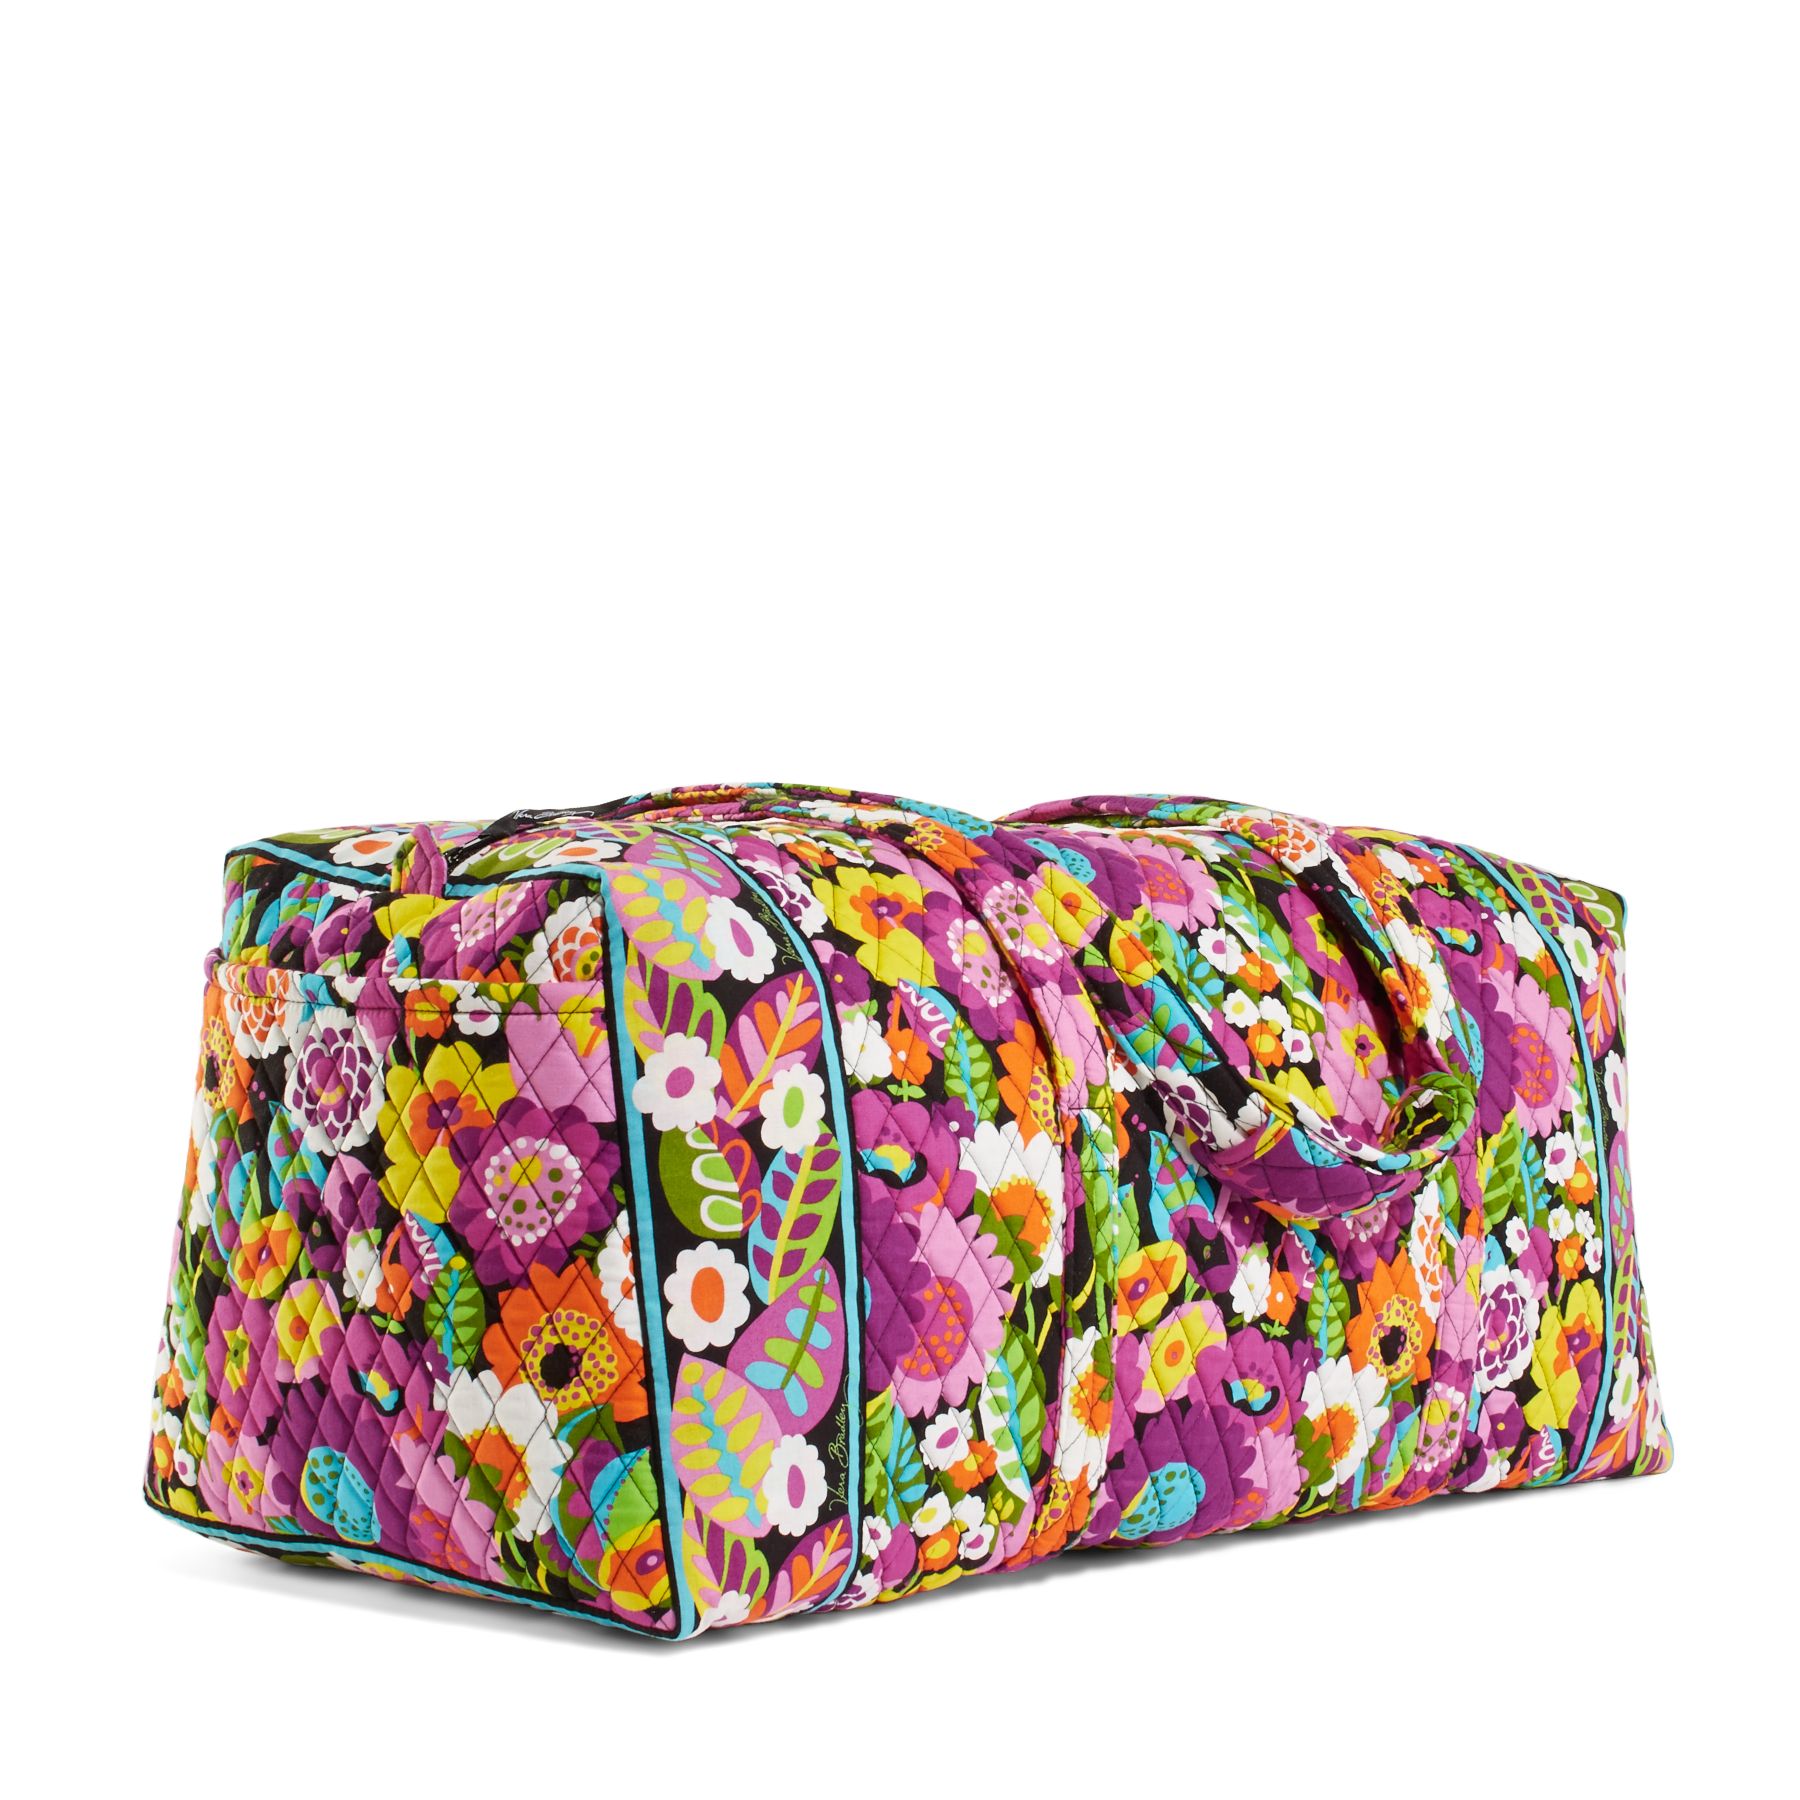 Vera Bradley XL Duffel Bag | eBay